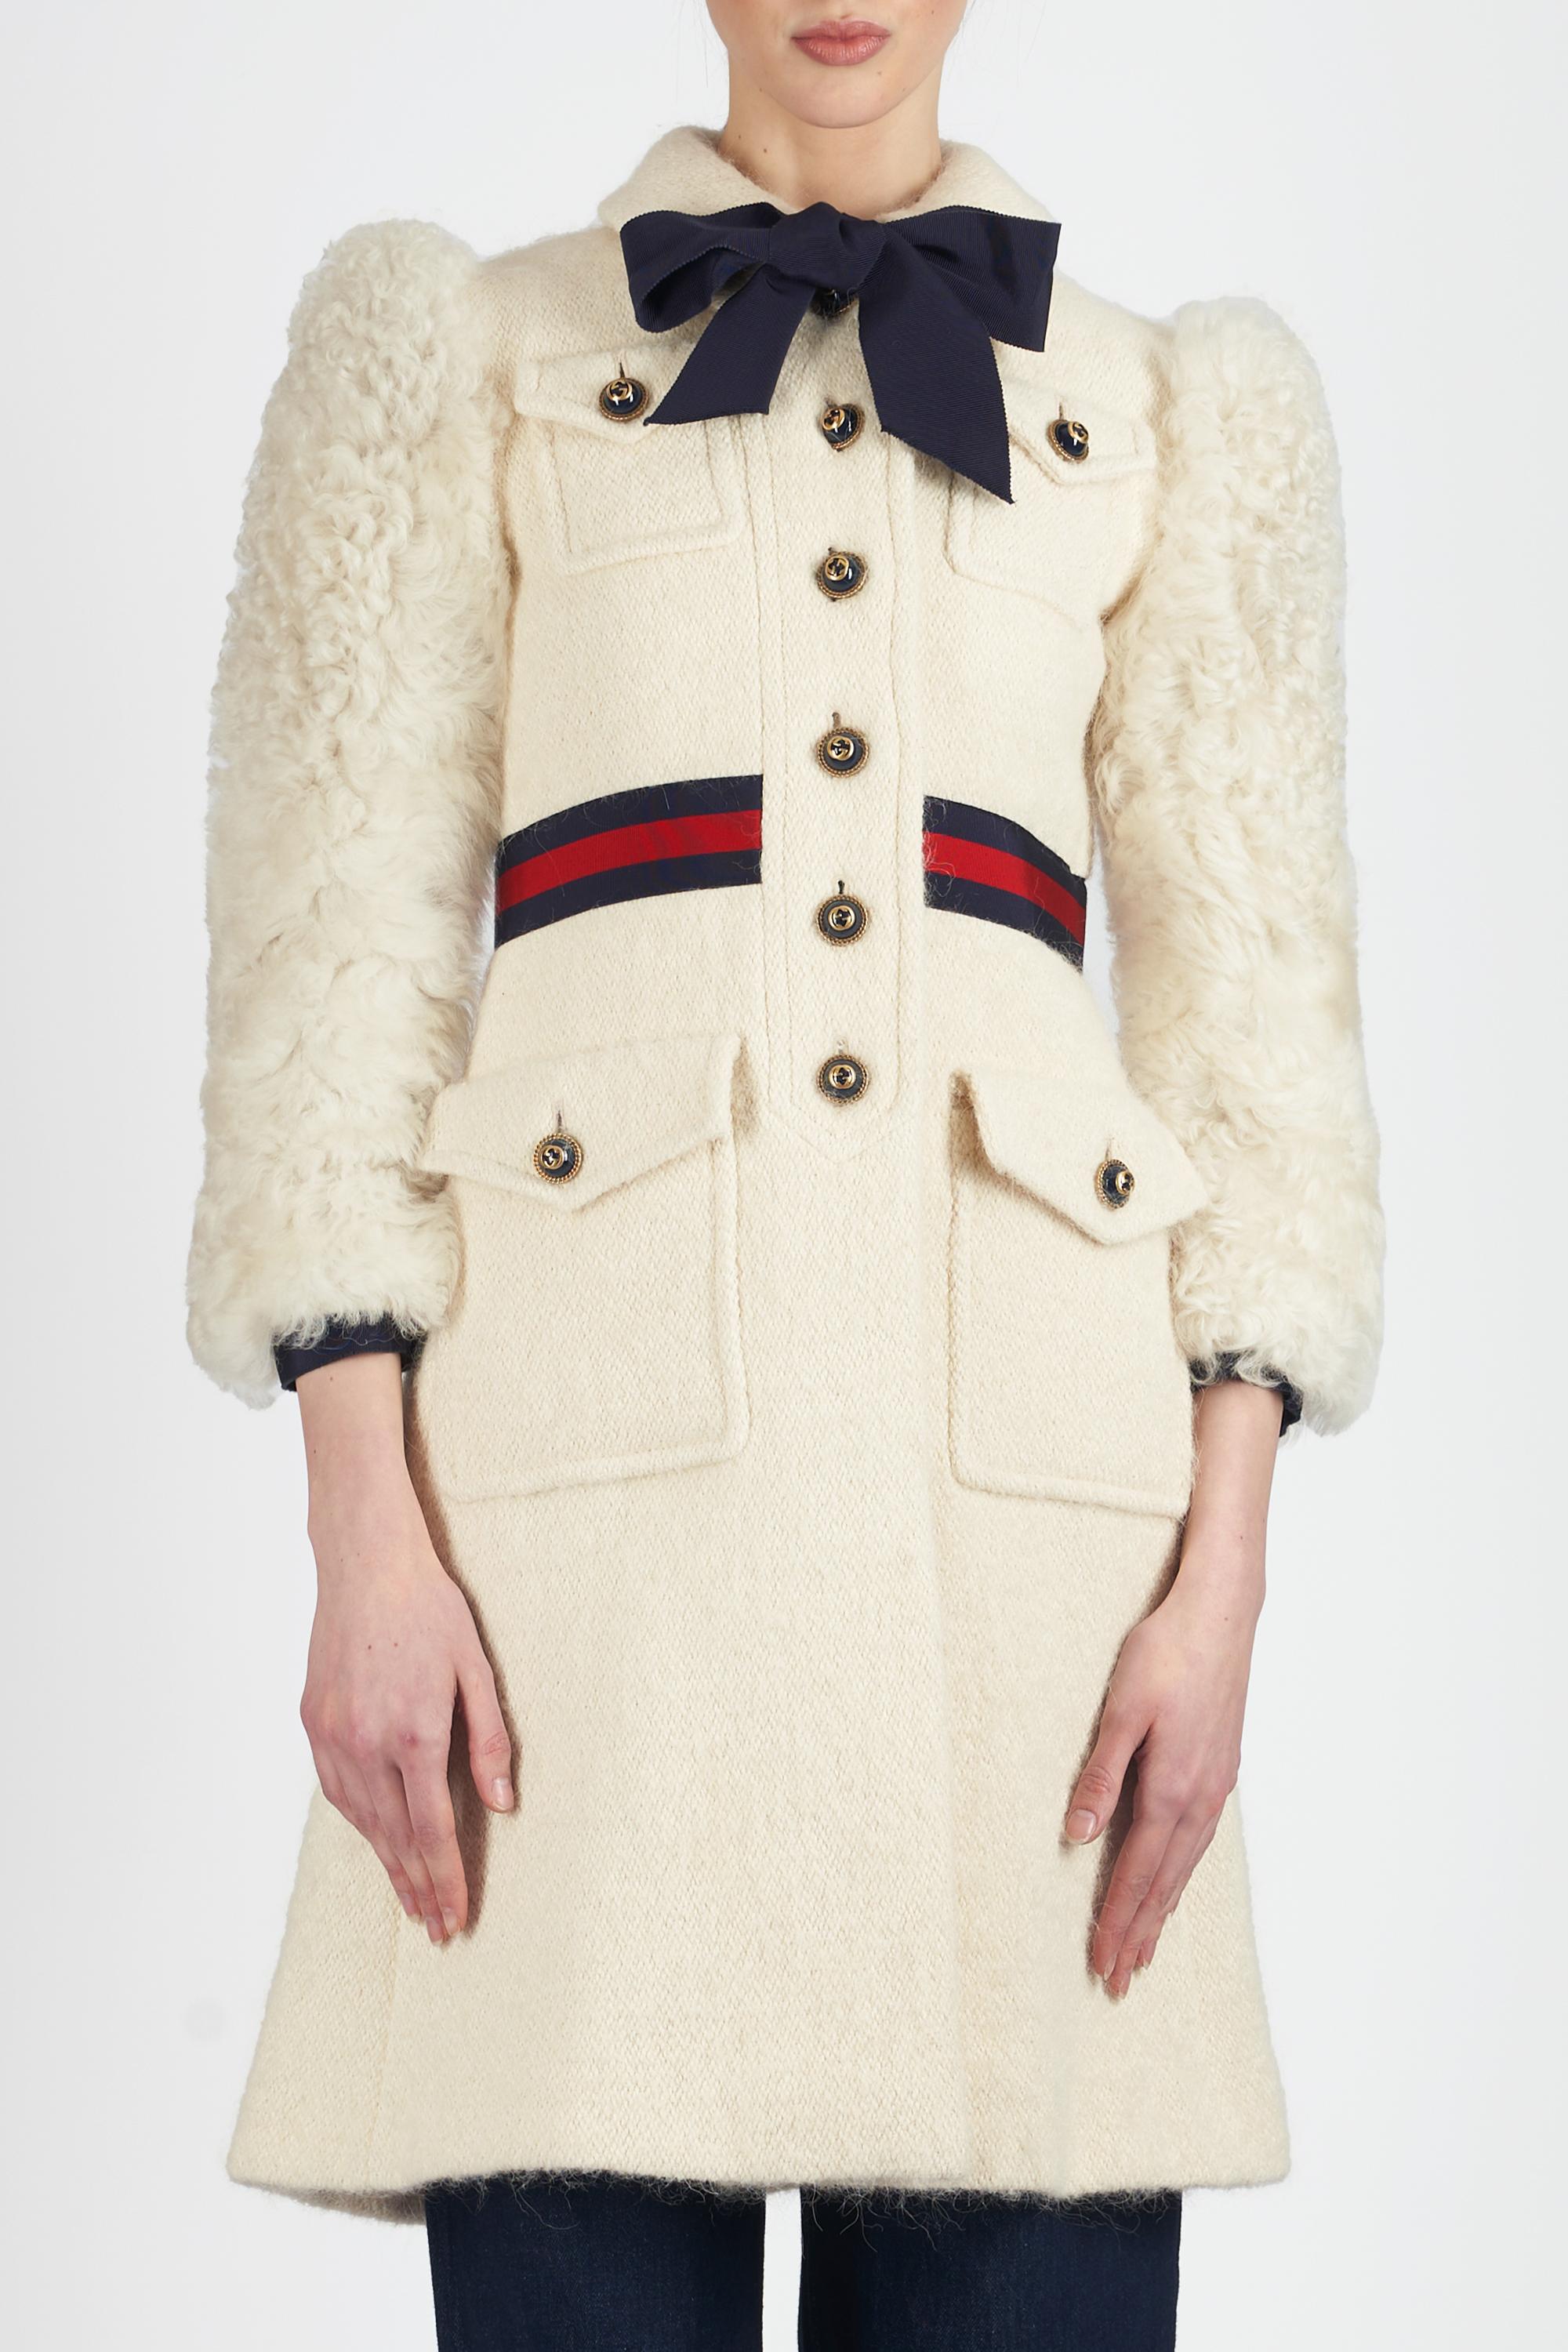 gucci white wool coat